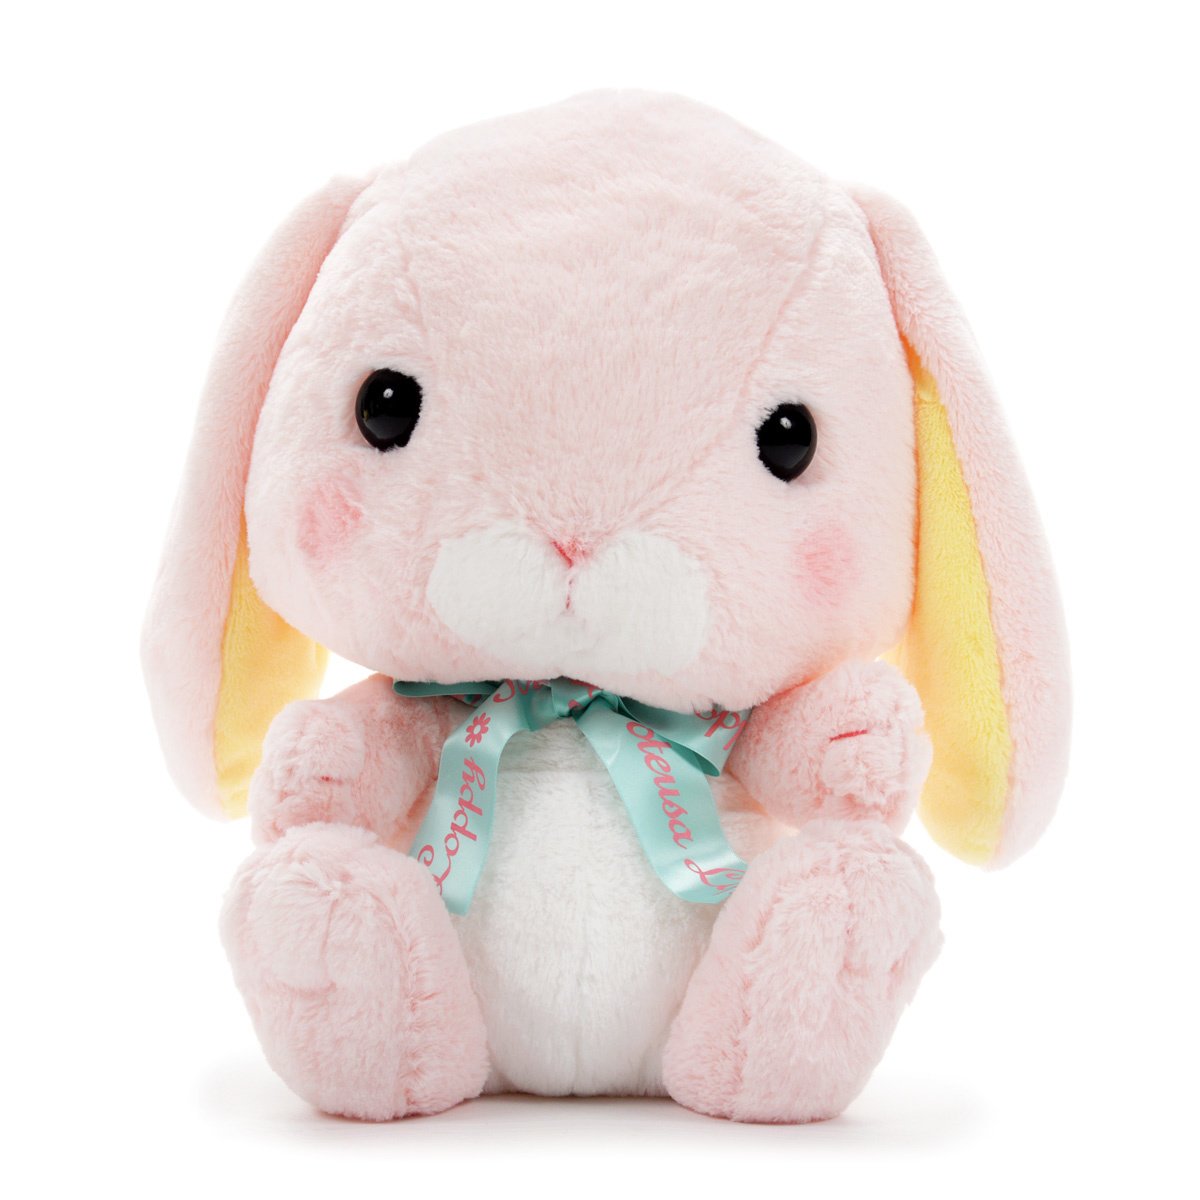 Plush Bunny, Amuse, Pote Usa Loppy, Monohana-chan, Pink, 16 Inches